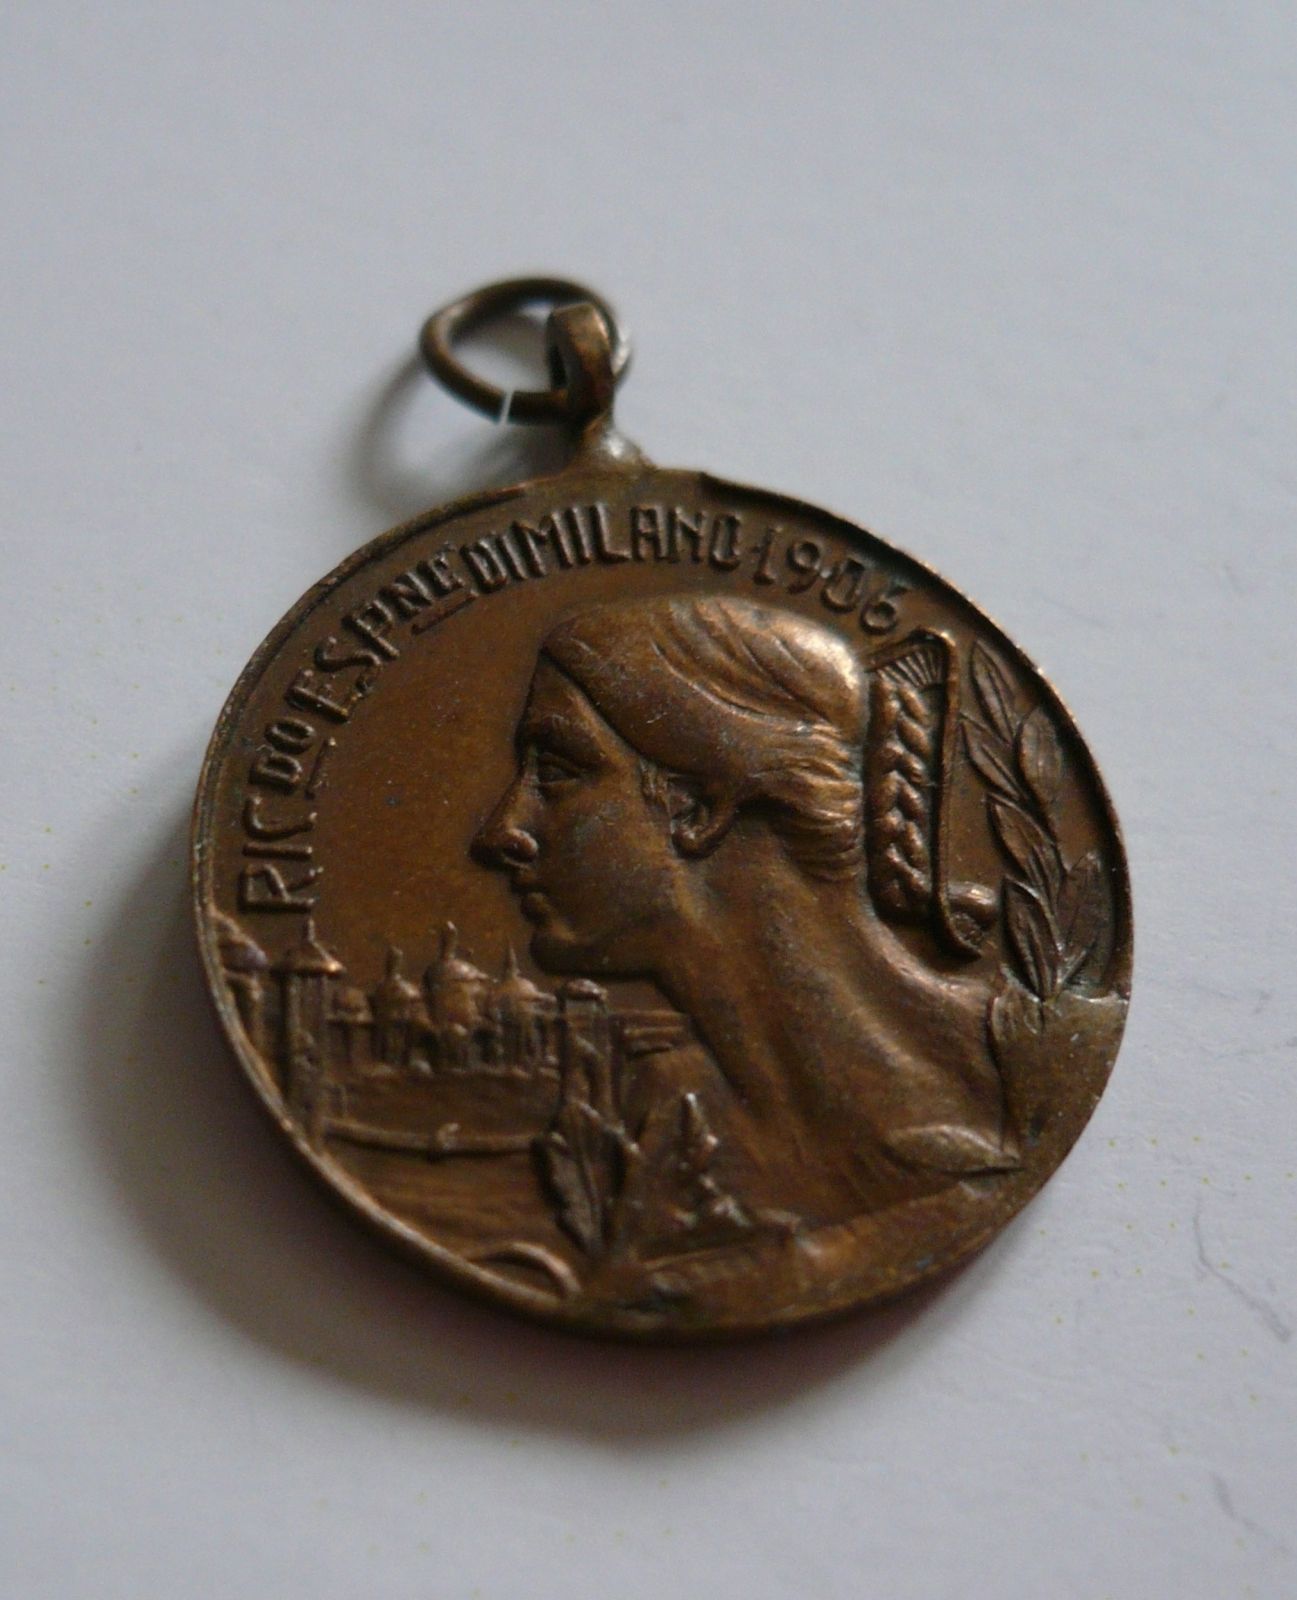 inaugurační medaile 1906, Španělsko